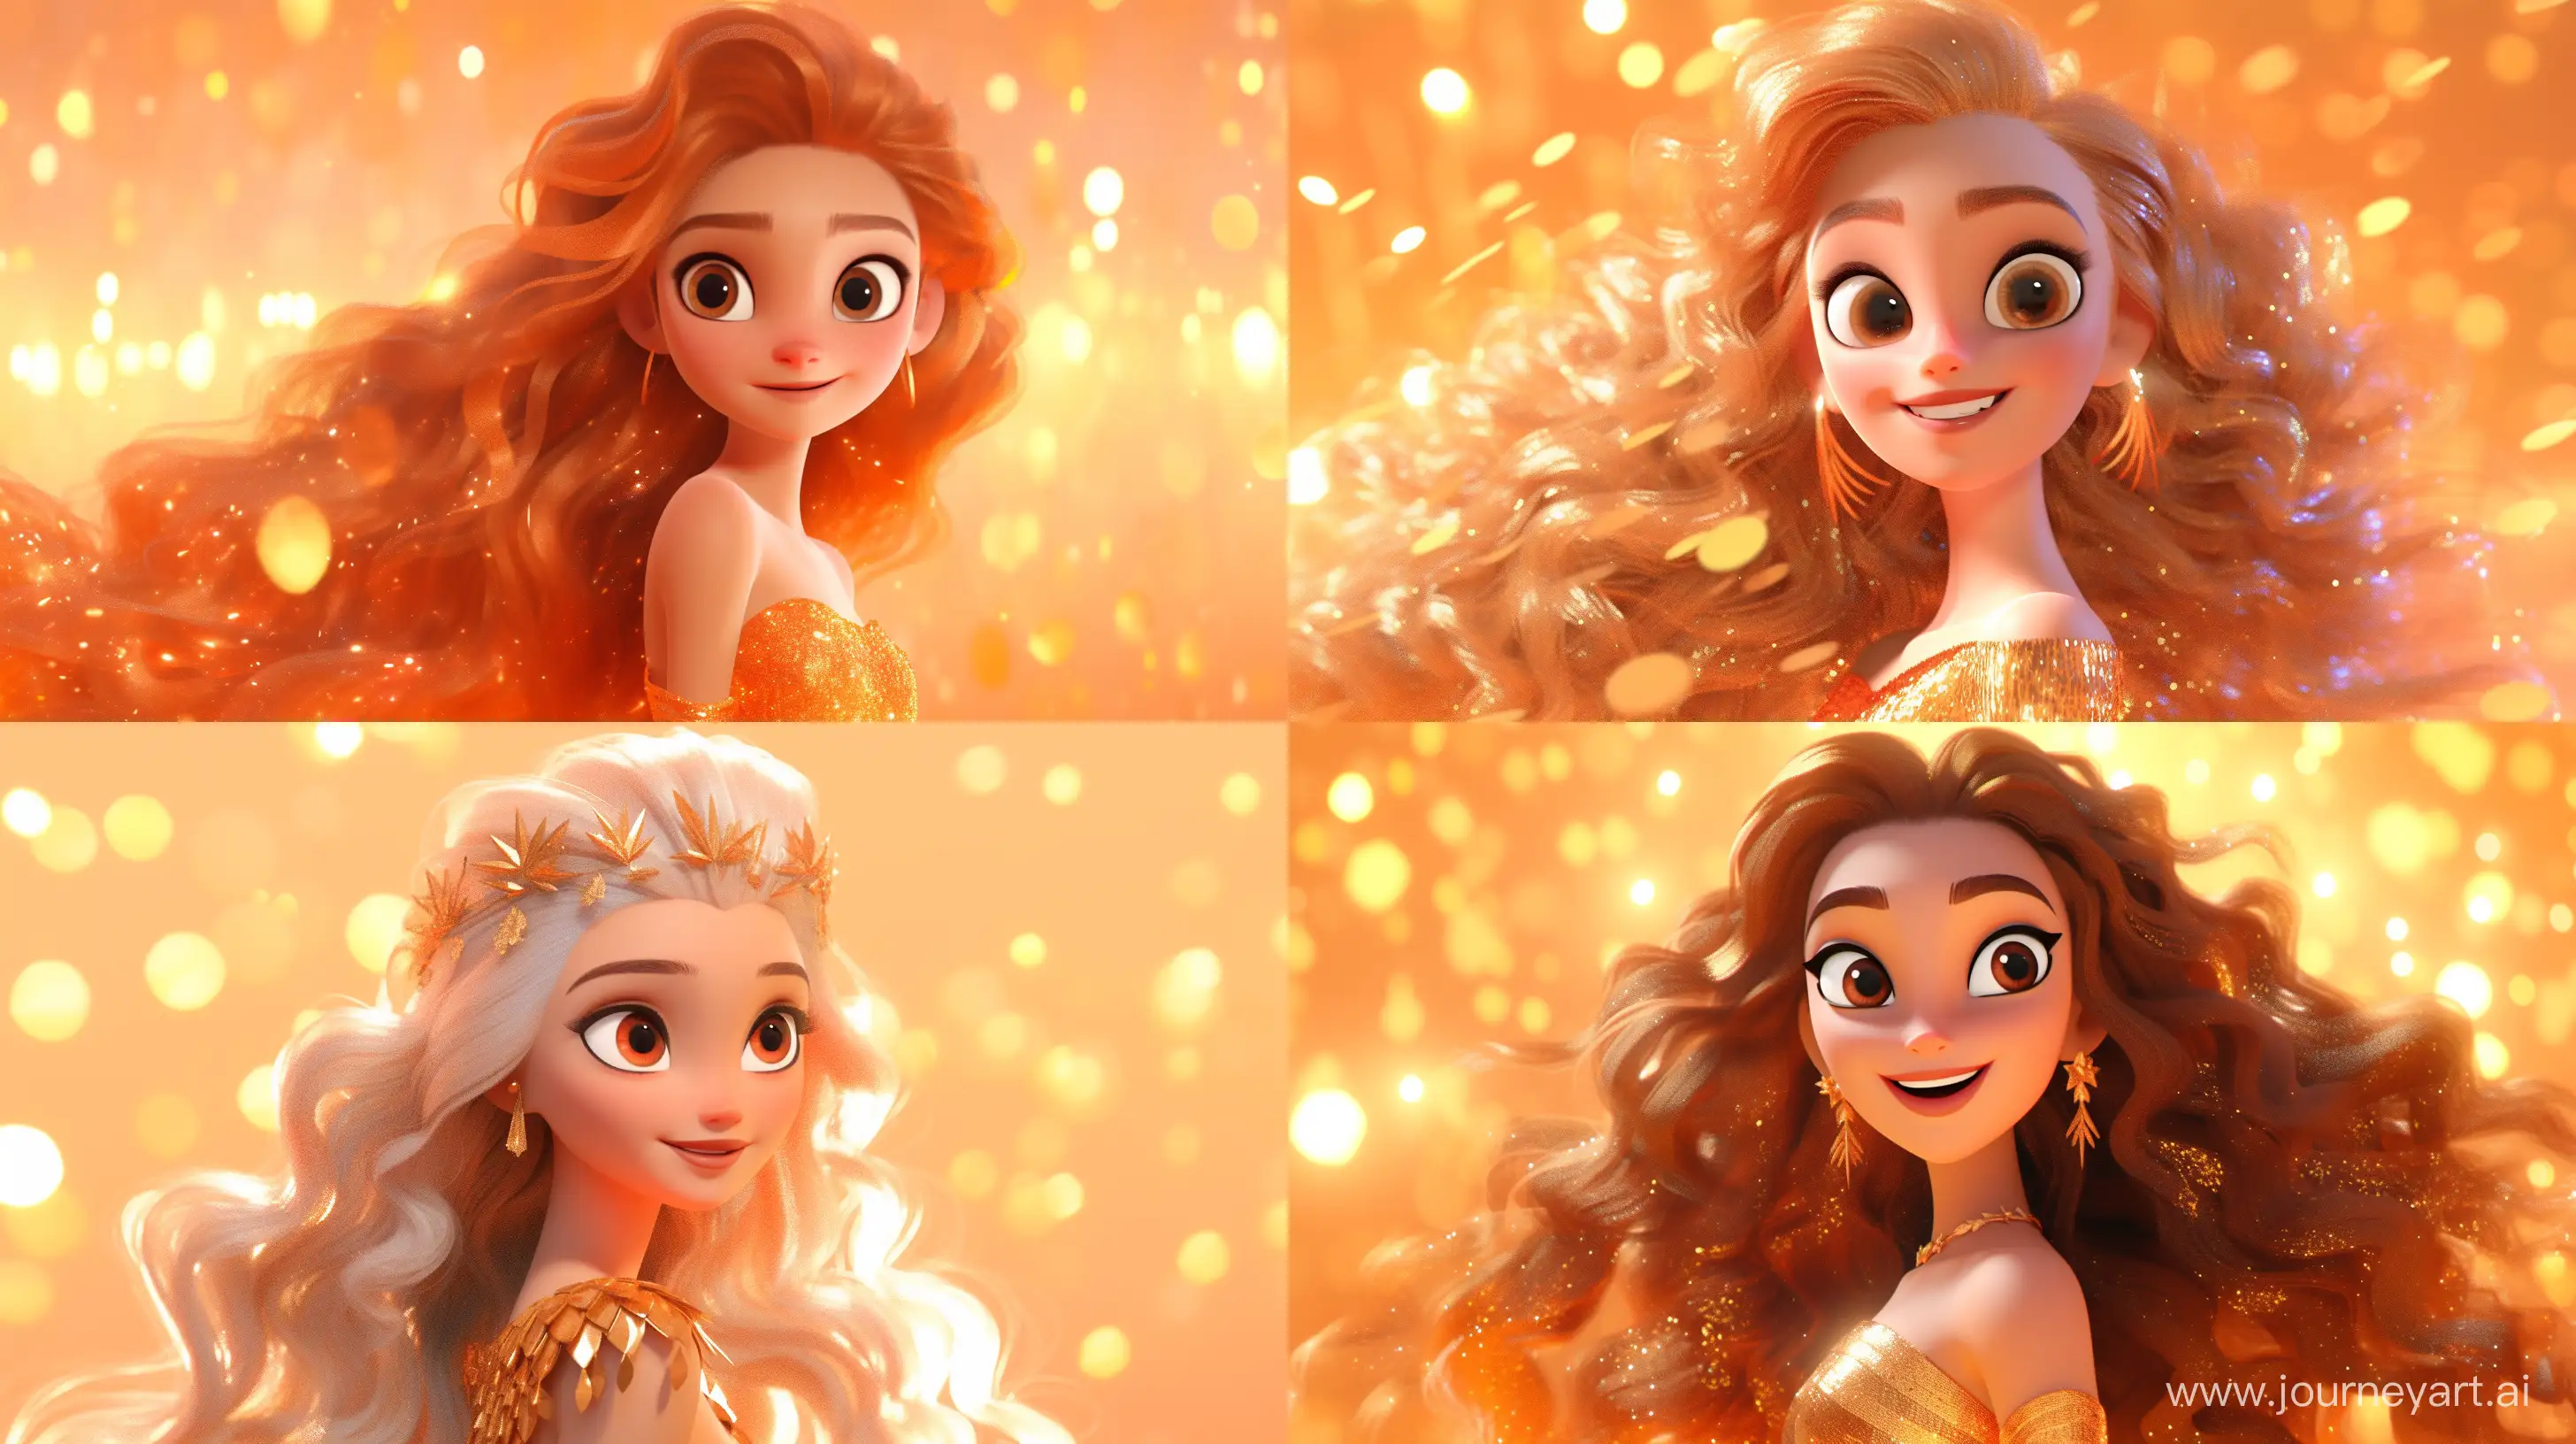 Smiling-Greek-Goddess-in-Vibrant-3D-Animation-with-Pixar-Style-on-Golden-Orange-Background